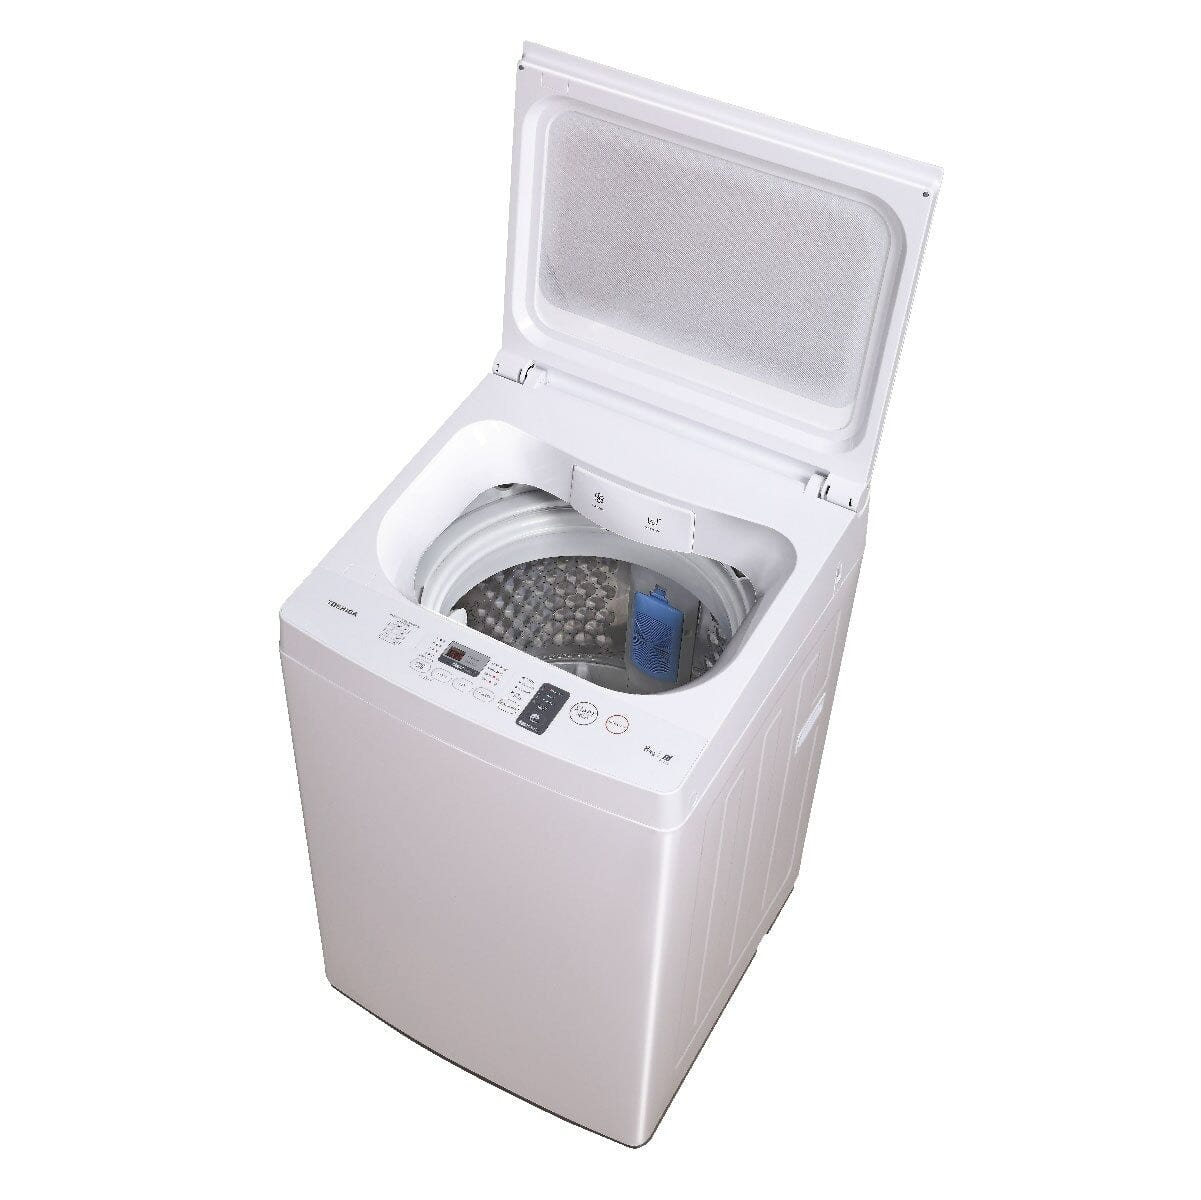 Toshiba 7 kg AW-J800AS Fully Auto Top Load Washing Machine Toshiba 